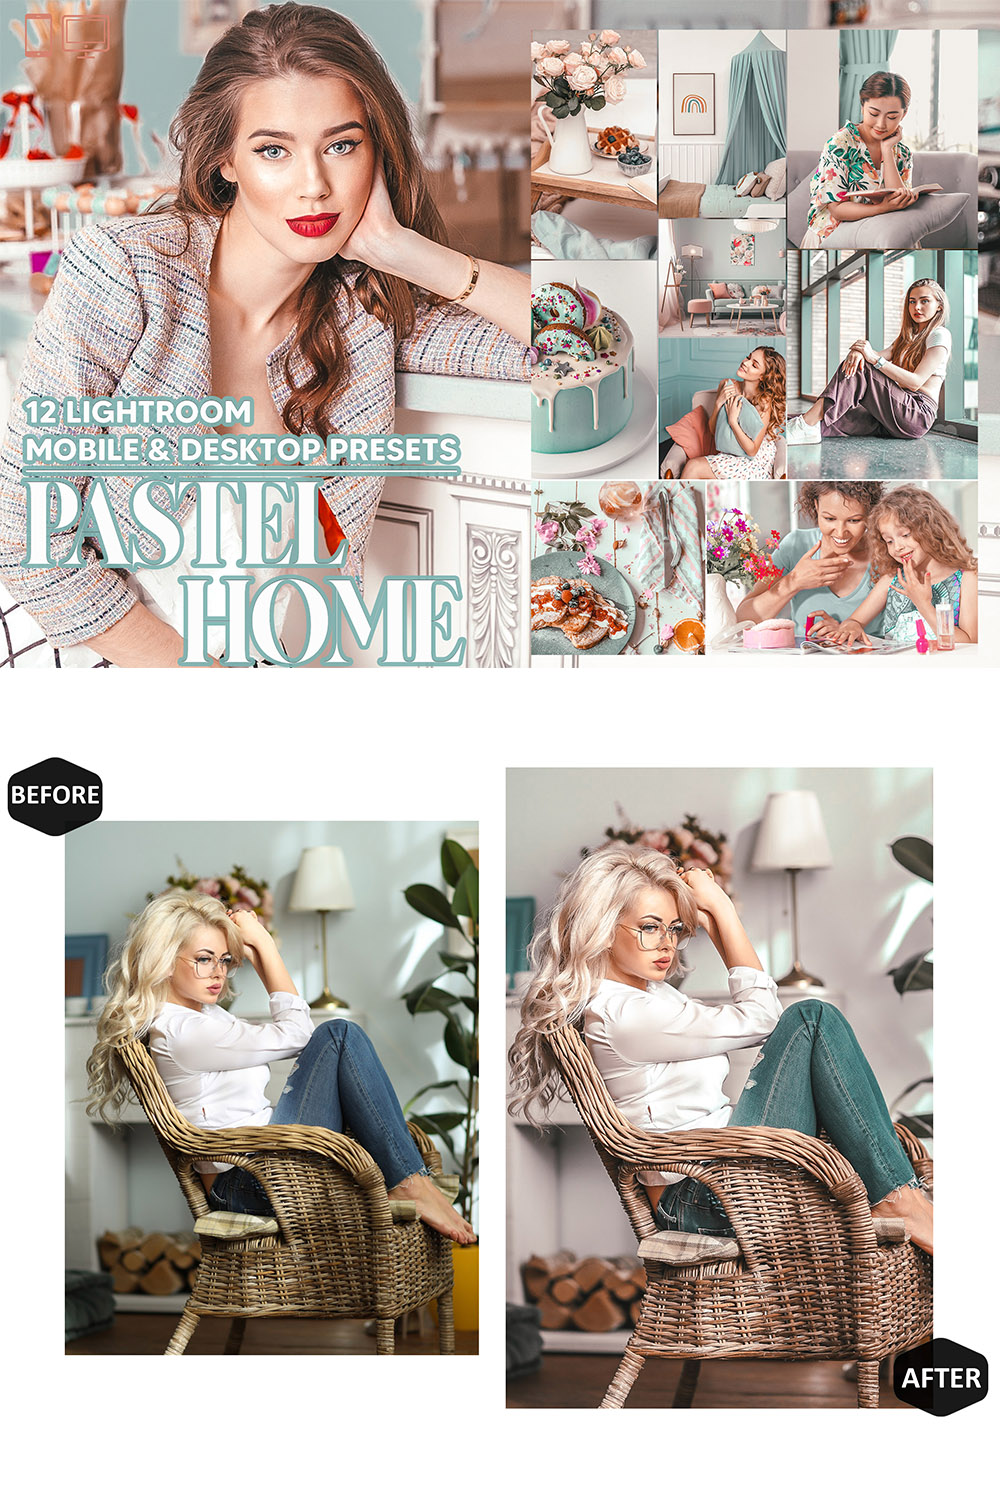 12 Pastel Home Lightroom Presets, Soft Skin Mobile Preset, Bright And Airy Desktop LR Filter Lifestyle Theme For Blogger Portrait Instagram pinterest preview image.